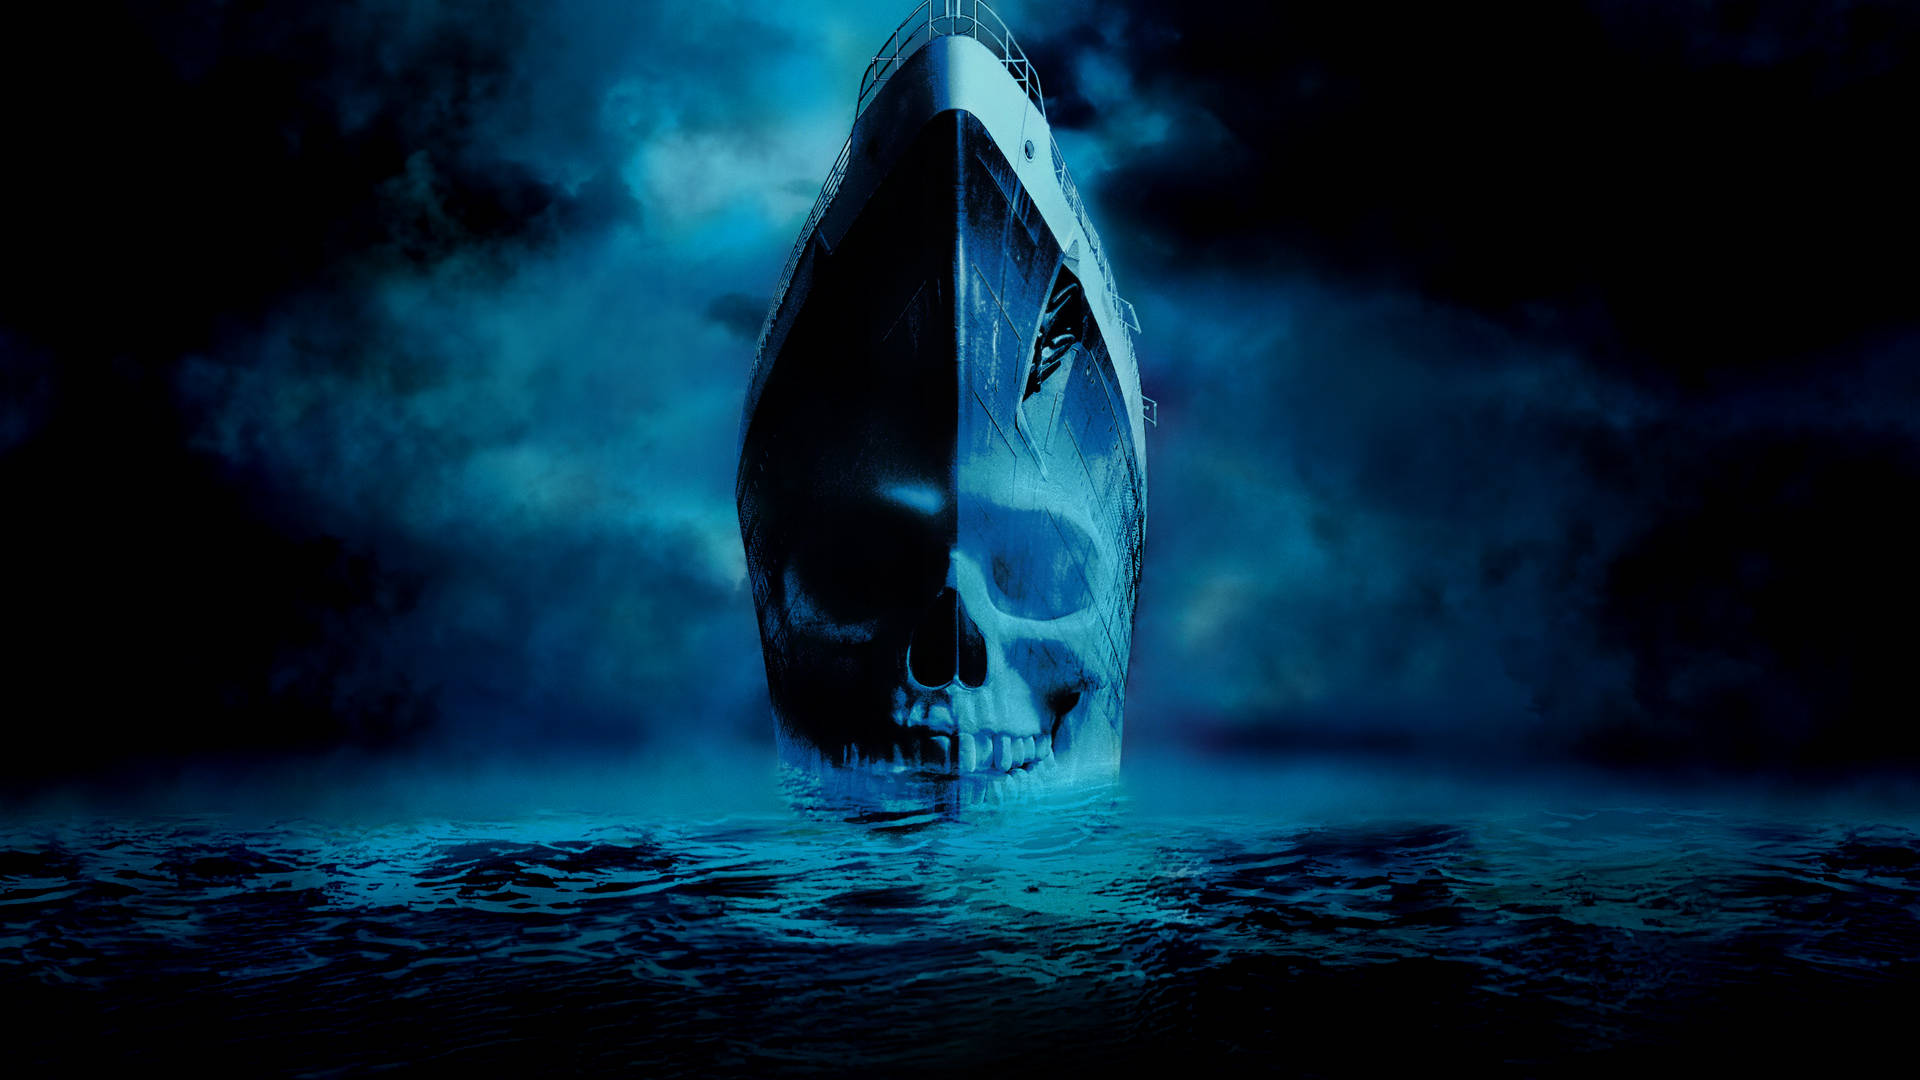 Dark Ghost Ship Skull Face Background